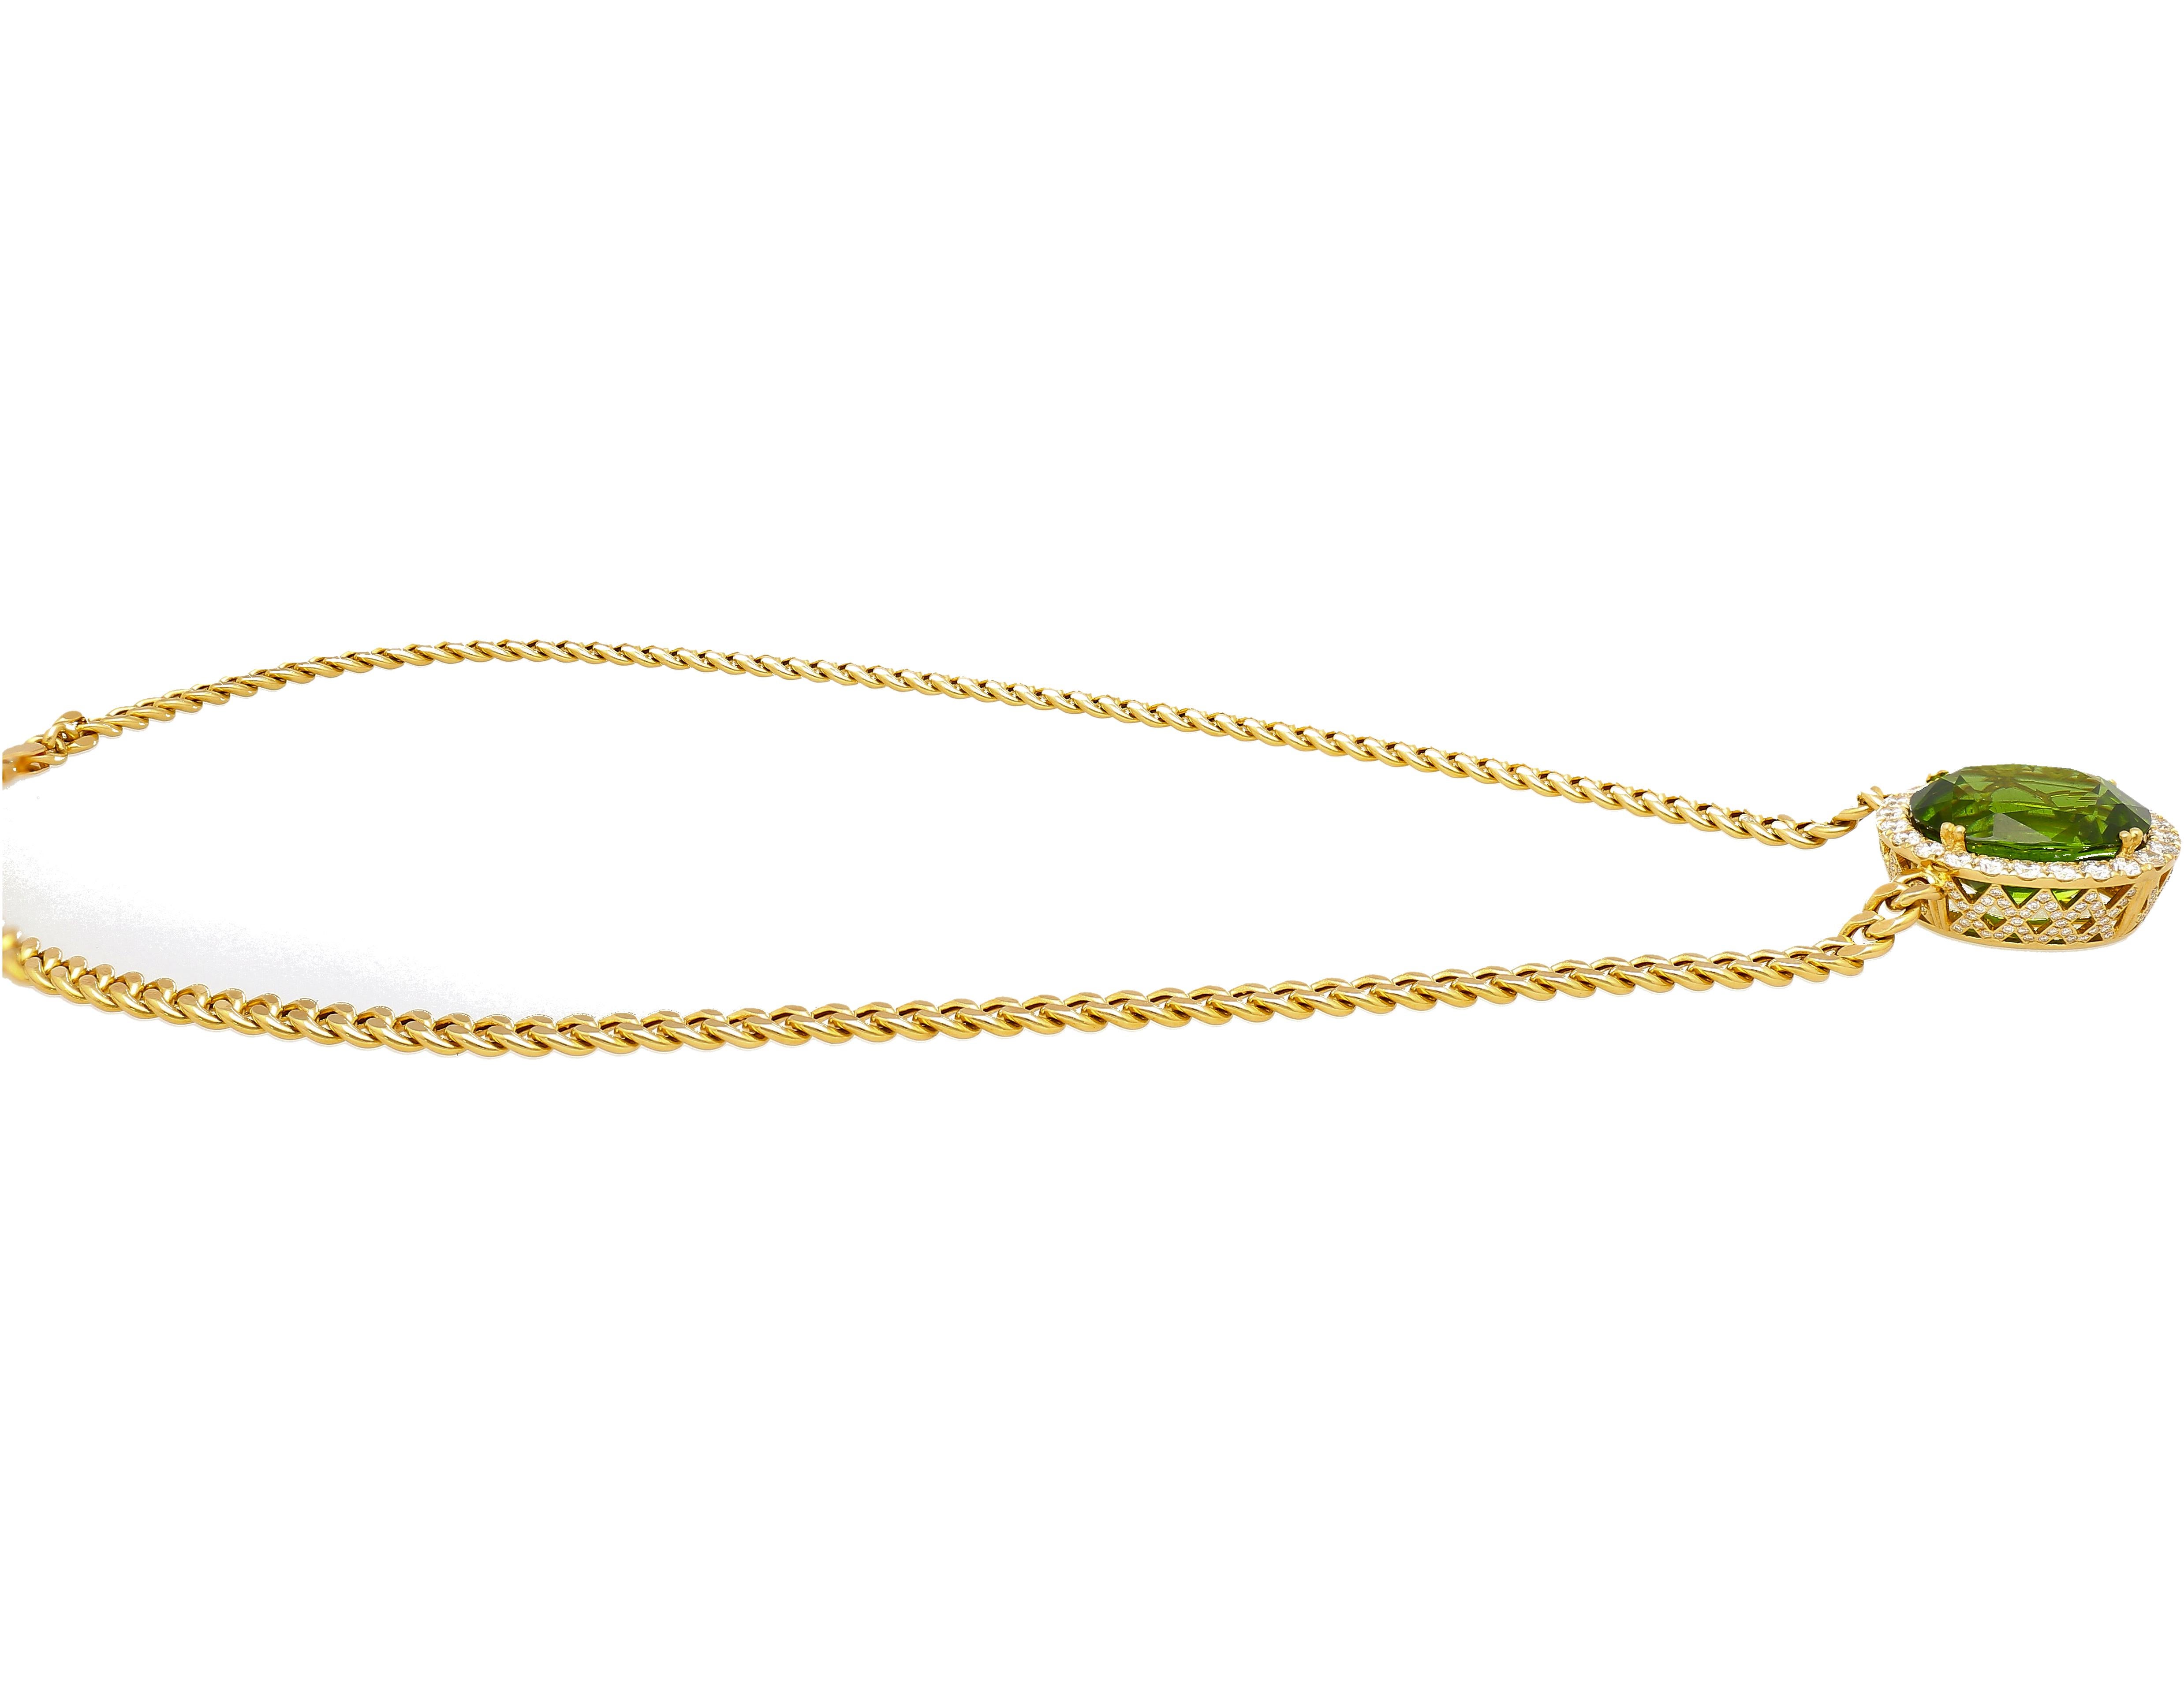 51 Carat Green Peridot Pendant with Diamond Halo in 18K Gold Cuban Chain For Sale 1